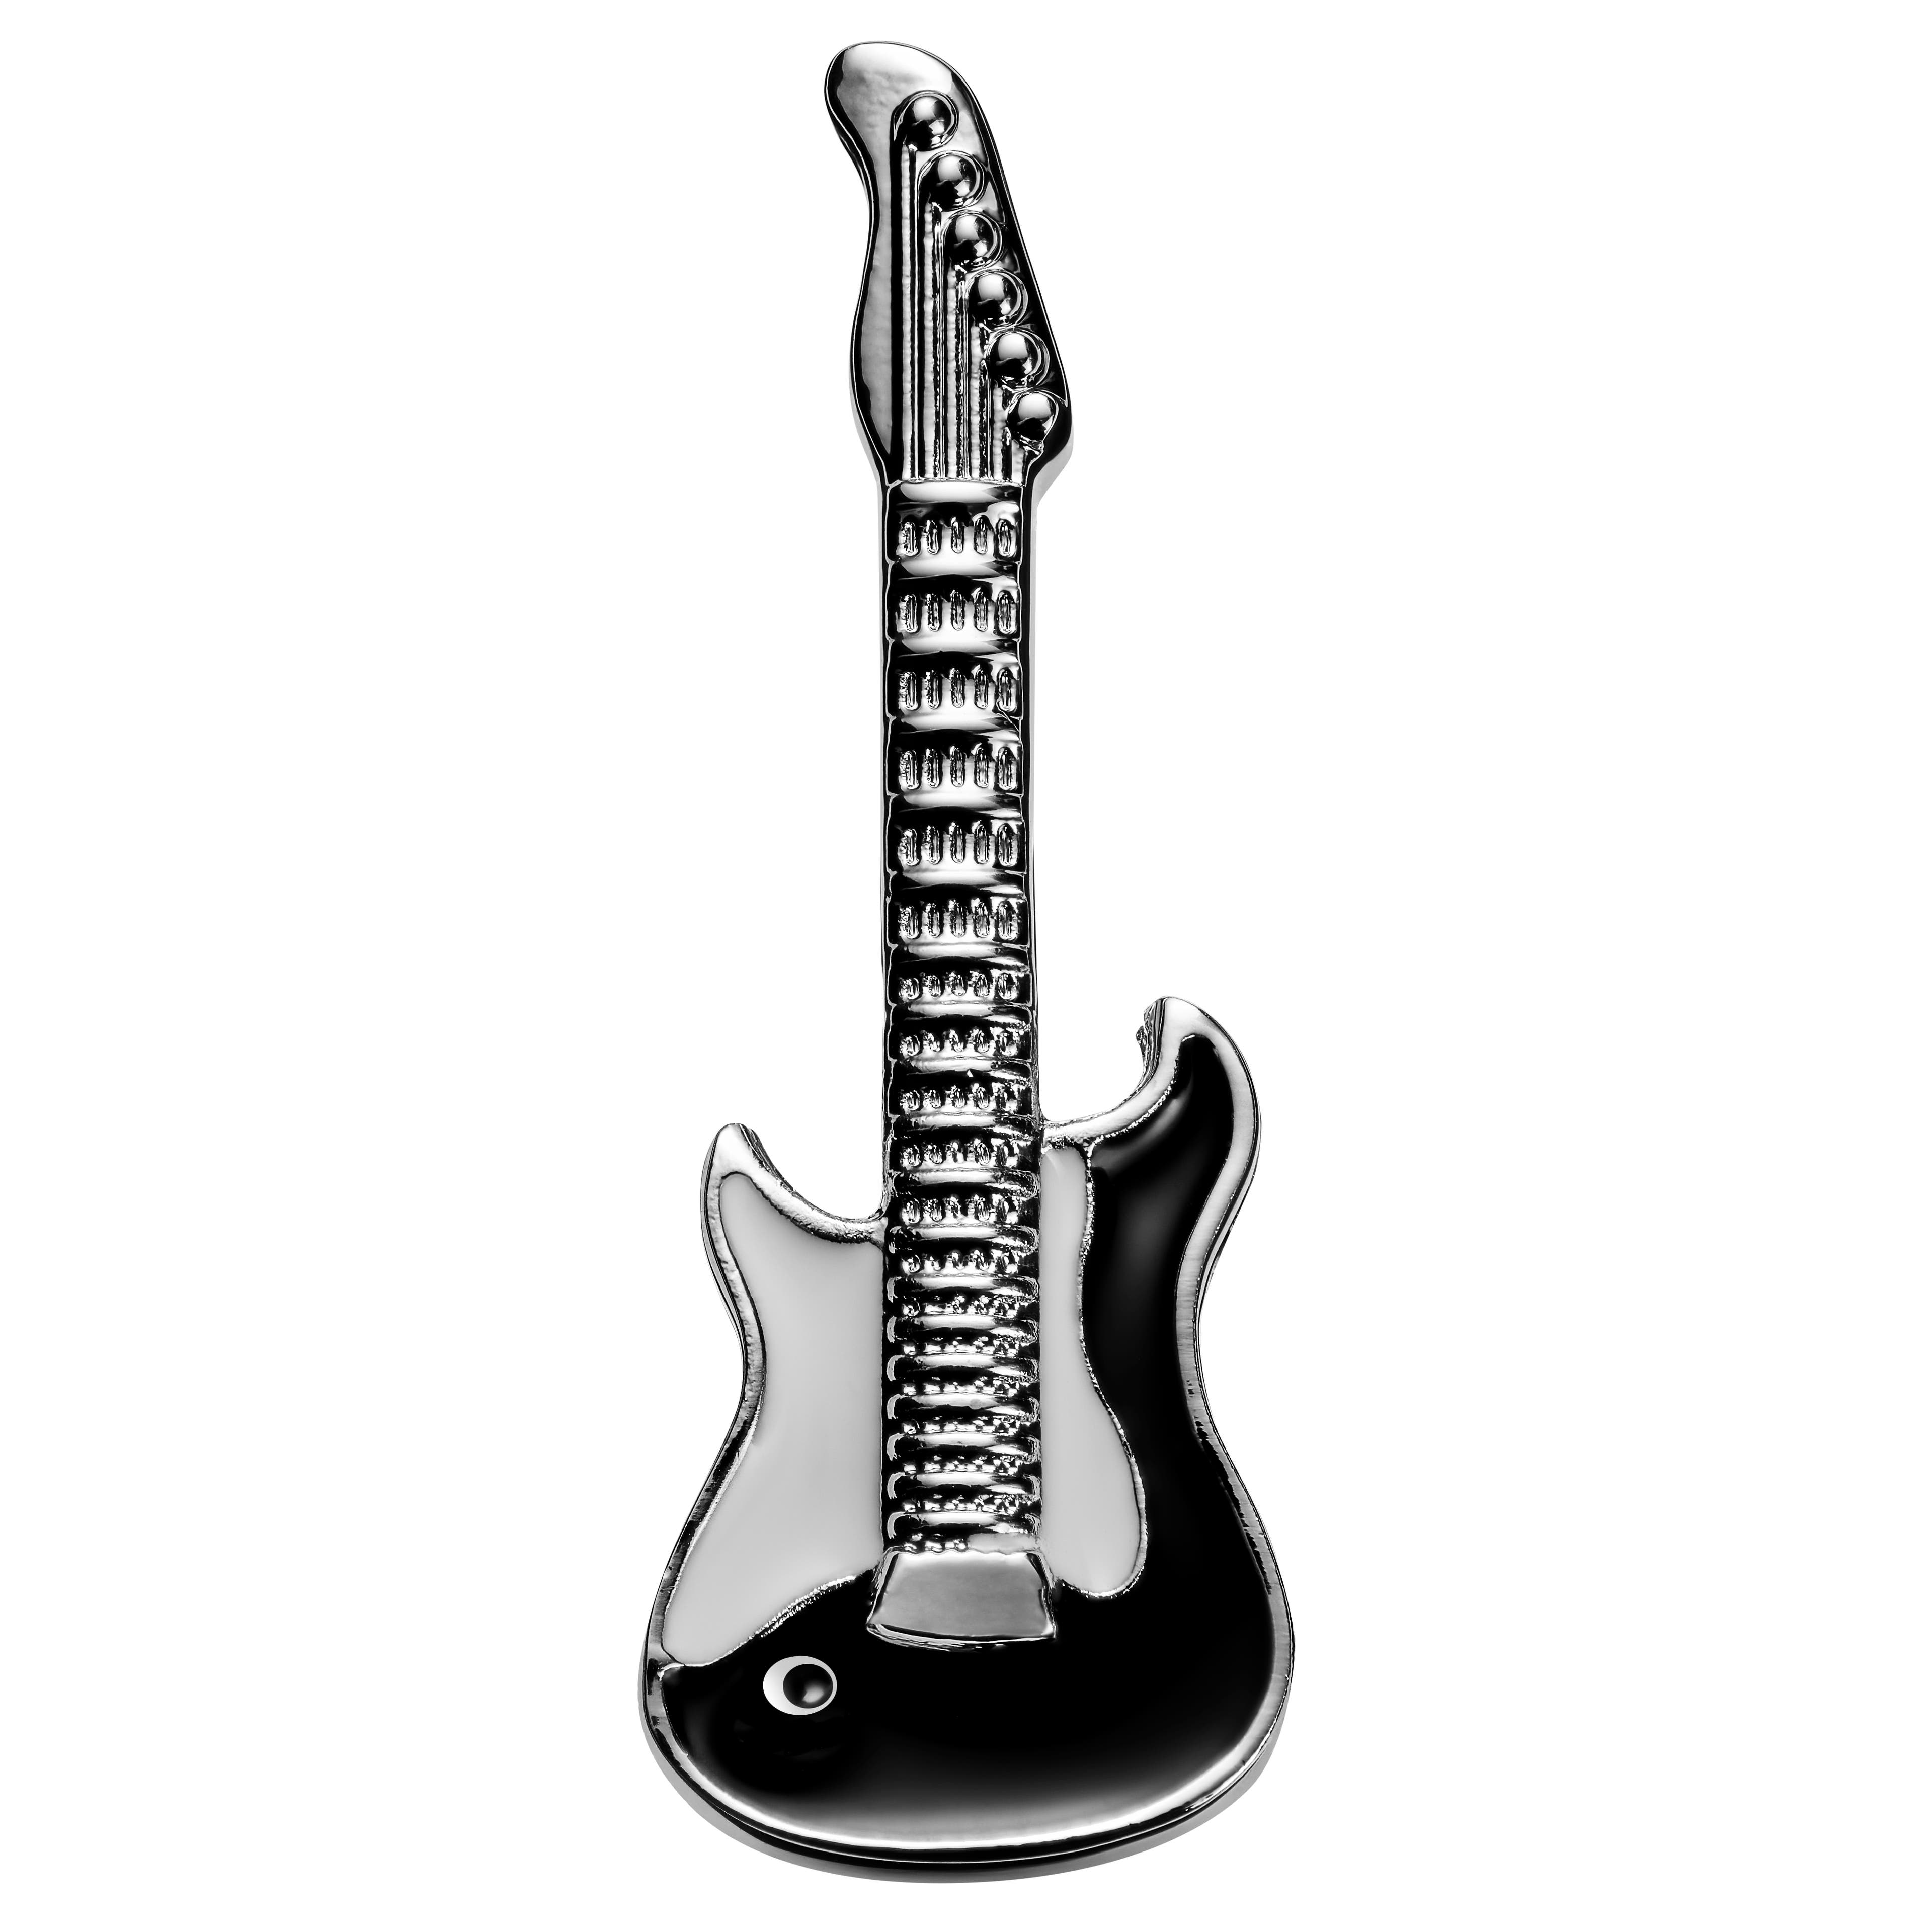 Echus | Jehlice do saka kytara stříbrné a černé barvy